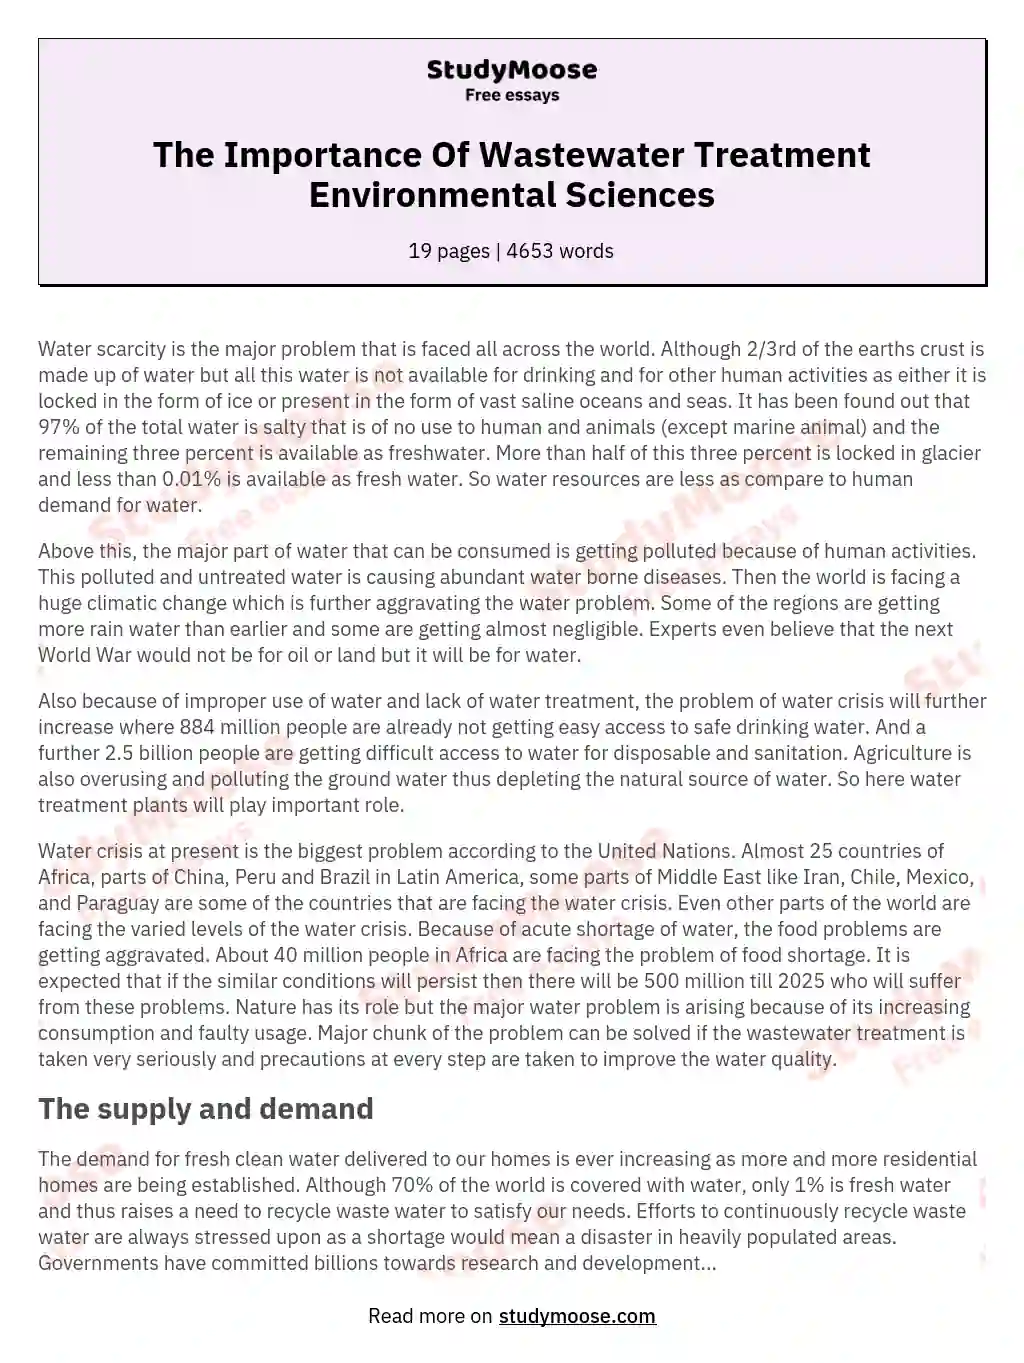 essay on wastewater treatment